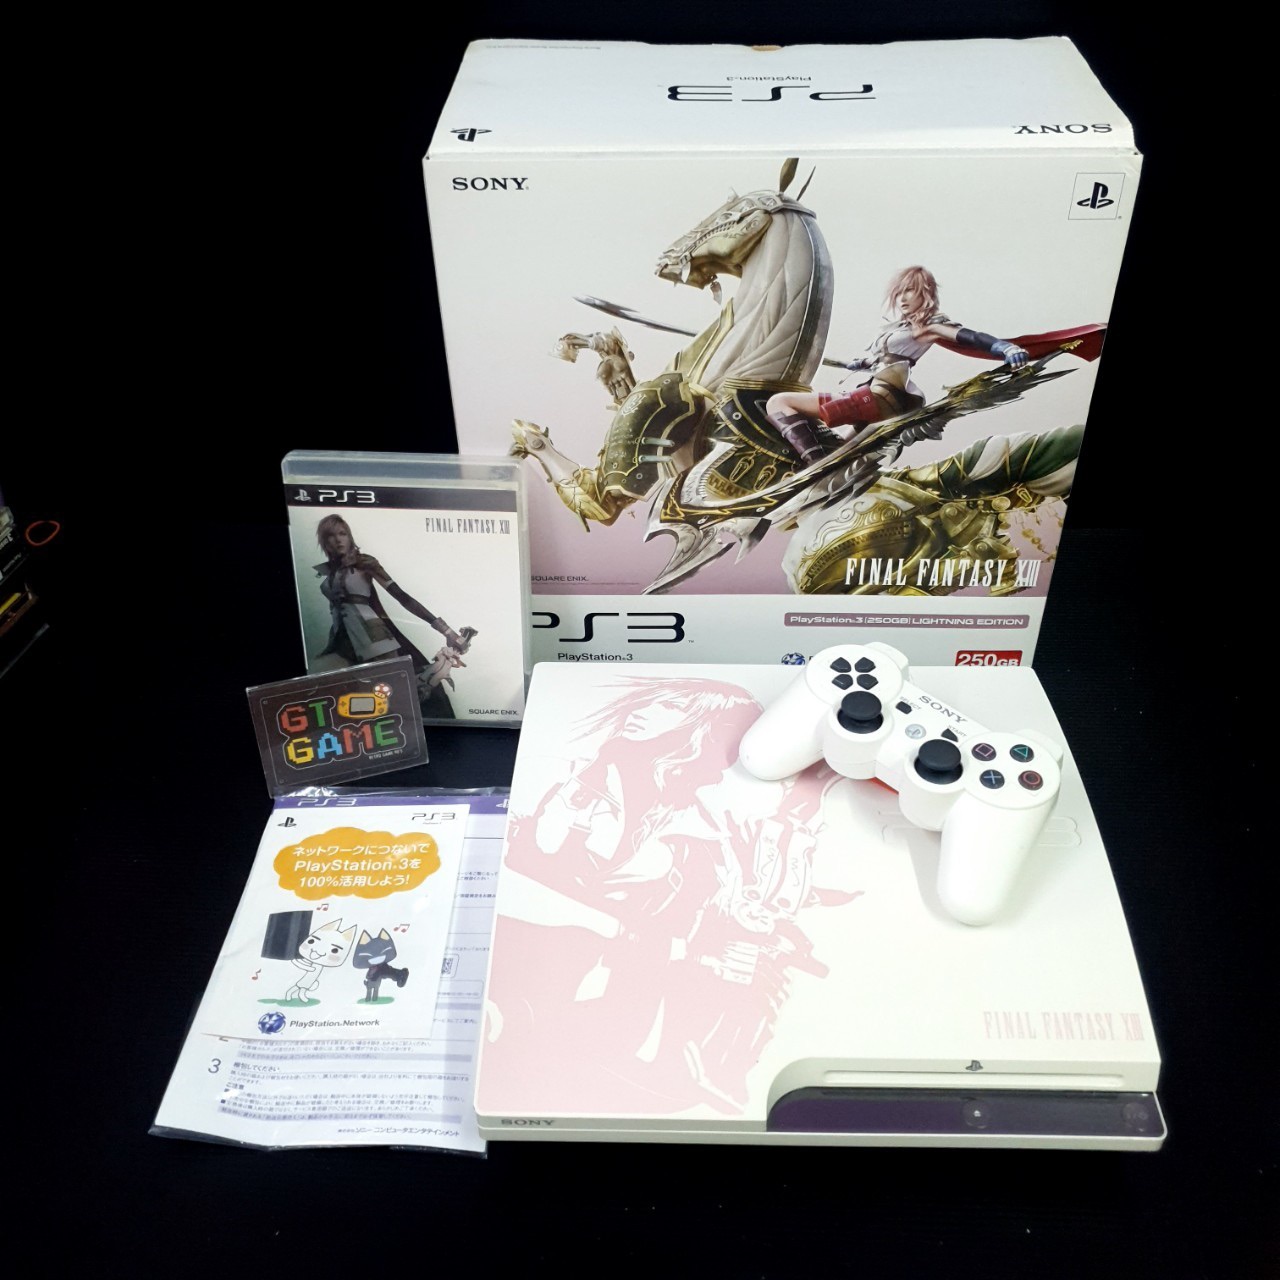 PS3 Slim Final fantasy XIII lighting Edition 🎮 250GB CECH-2000B ...